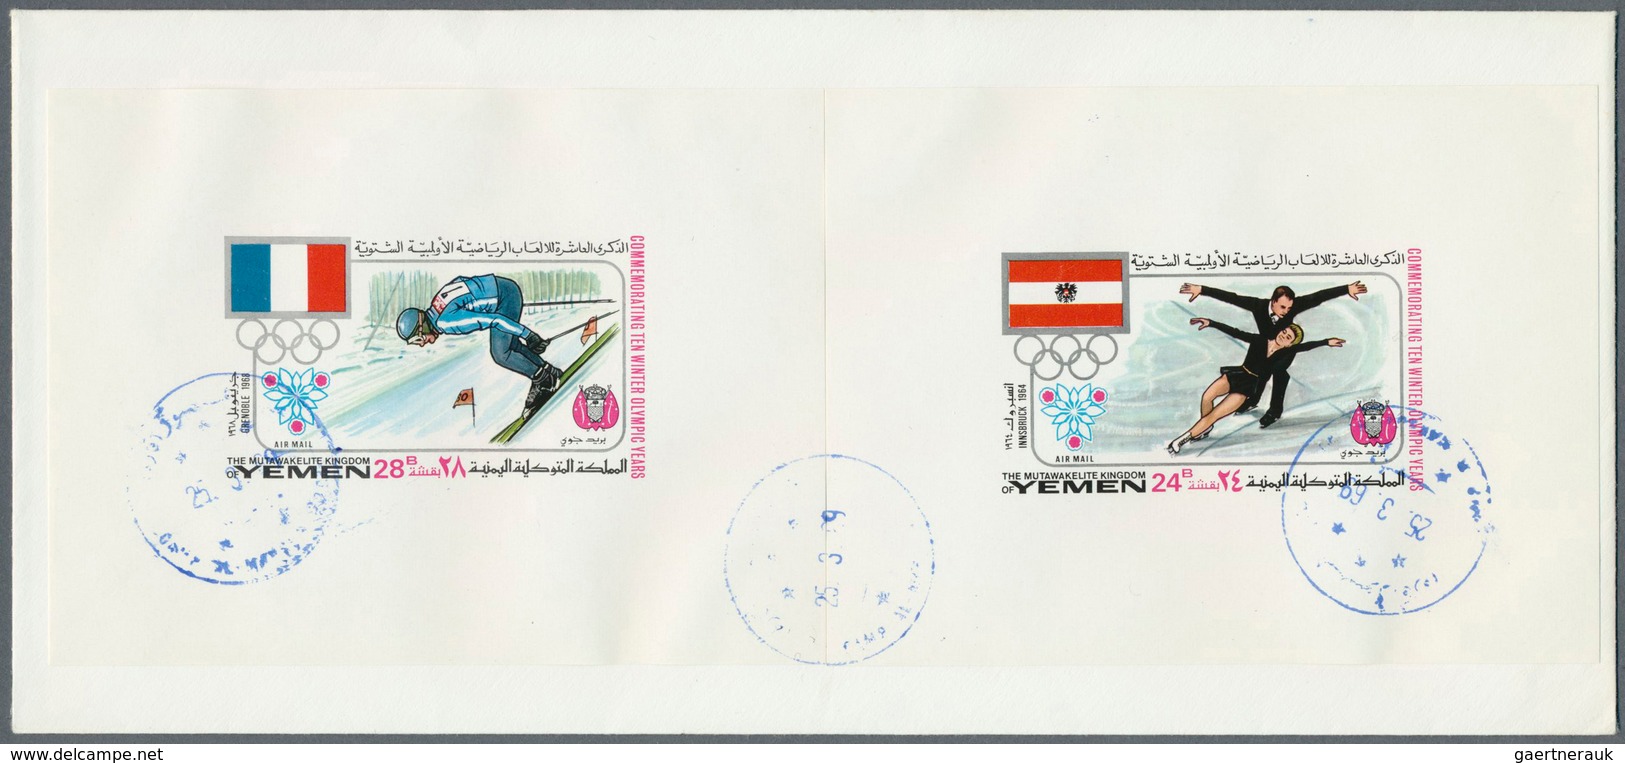 Jemen - Königreich: 1964/1969, specialised assortment incl. attractive varieties, thematic issues, u